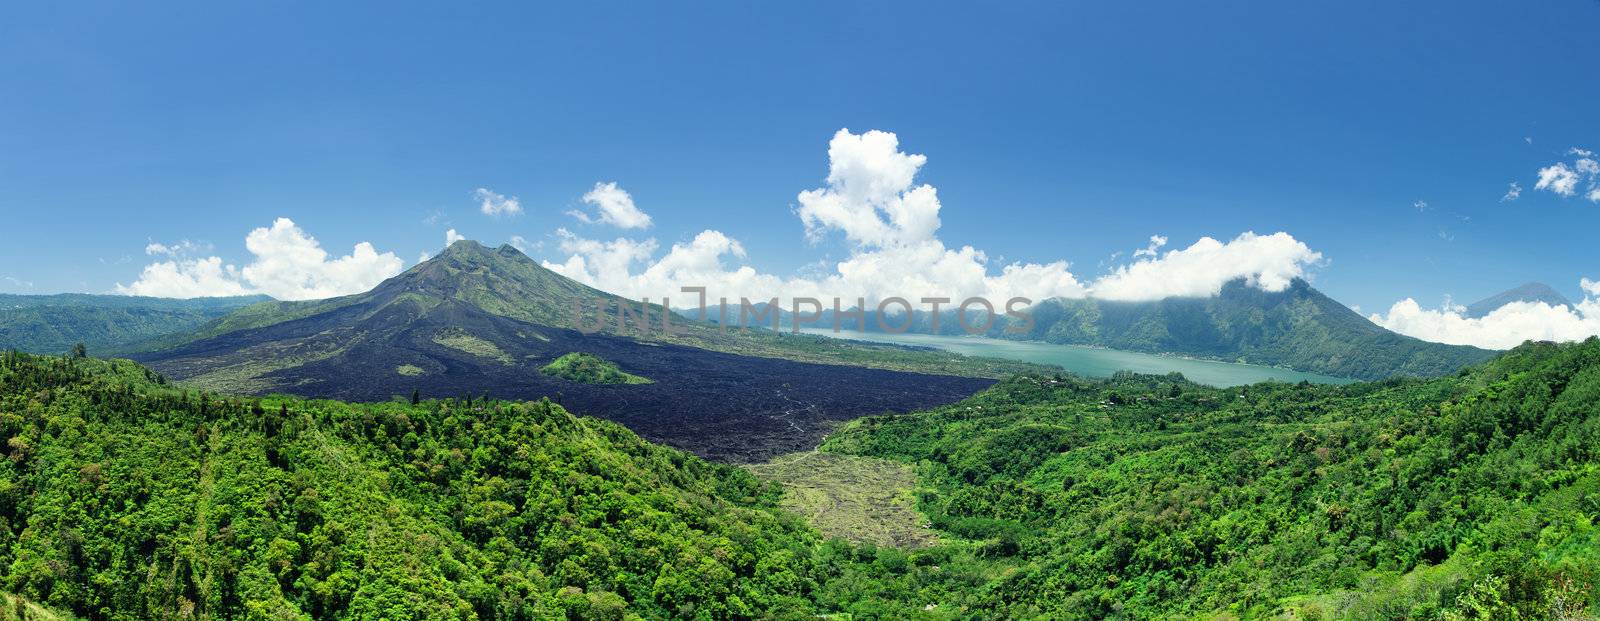  Batur volcano by vicnt